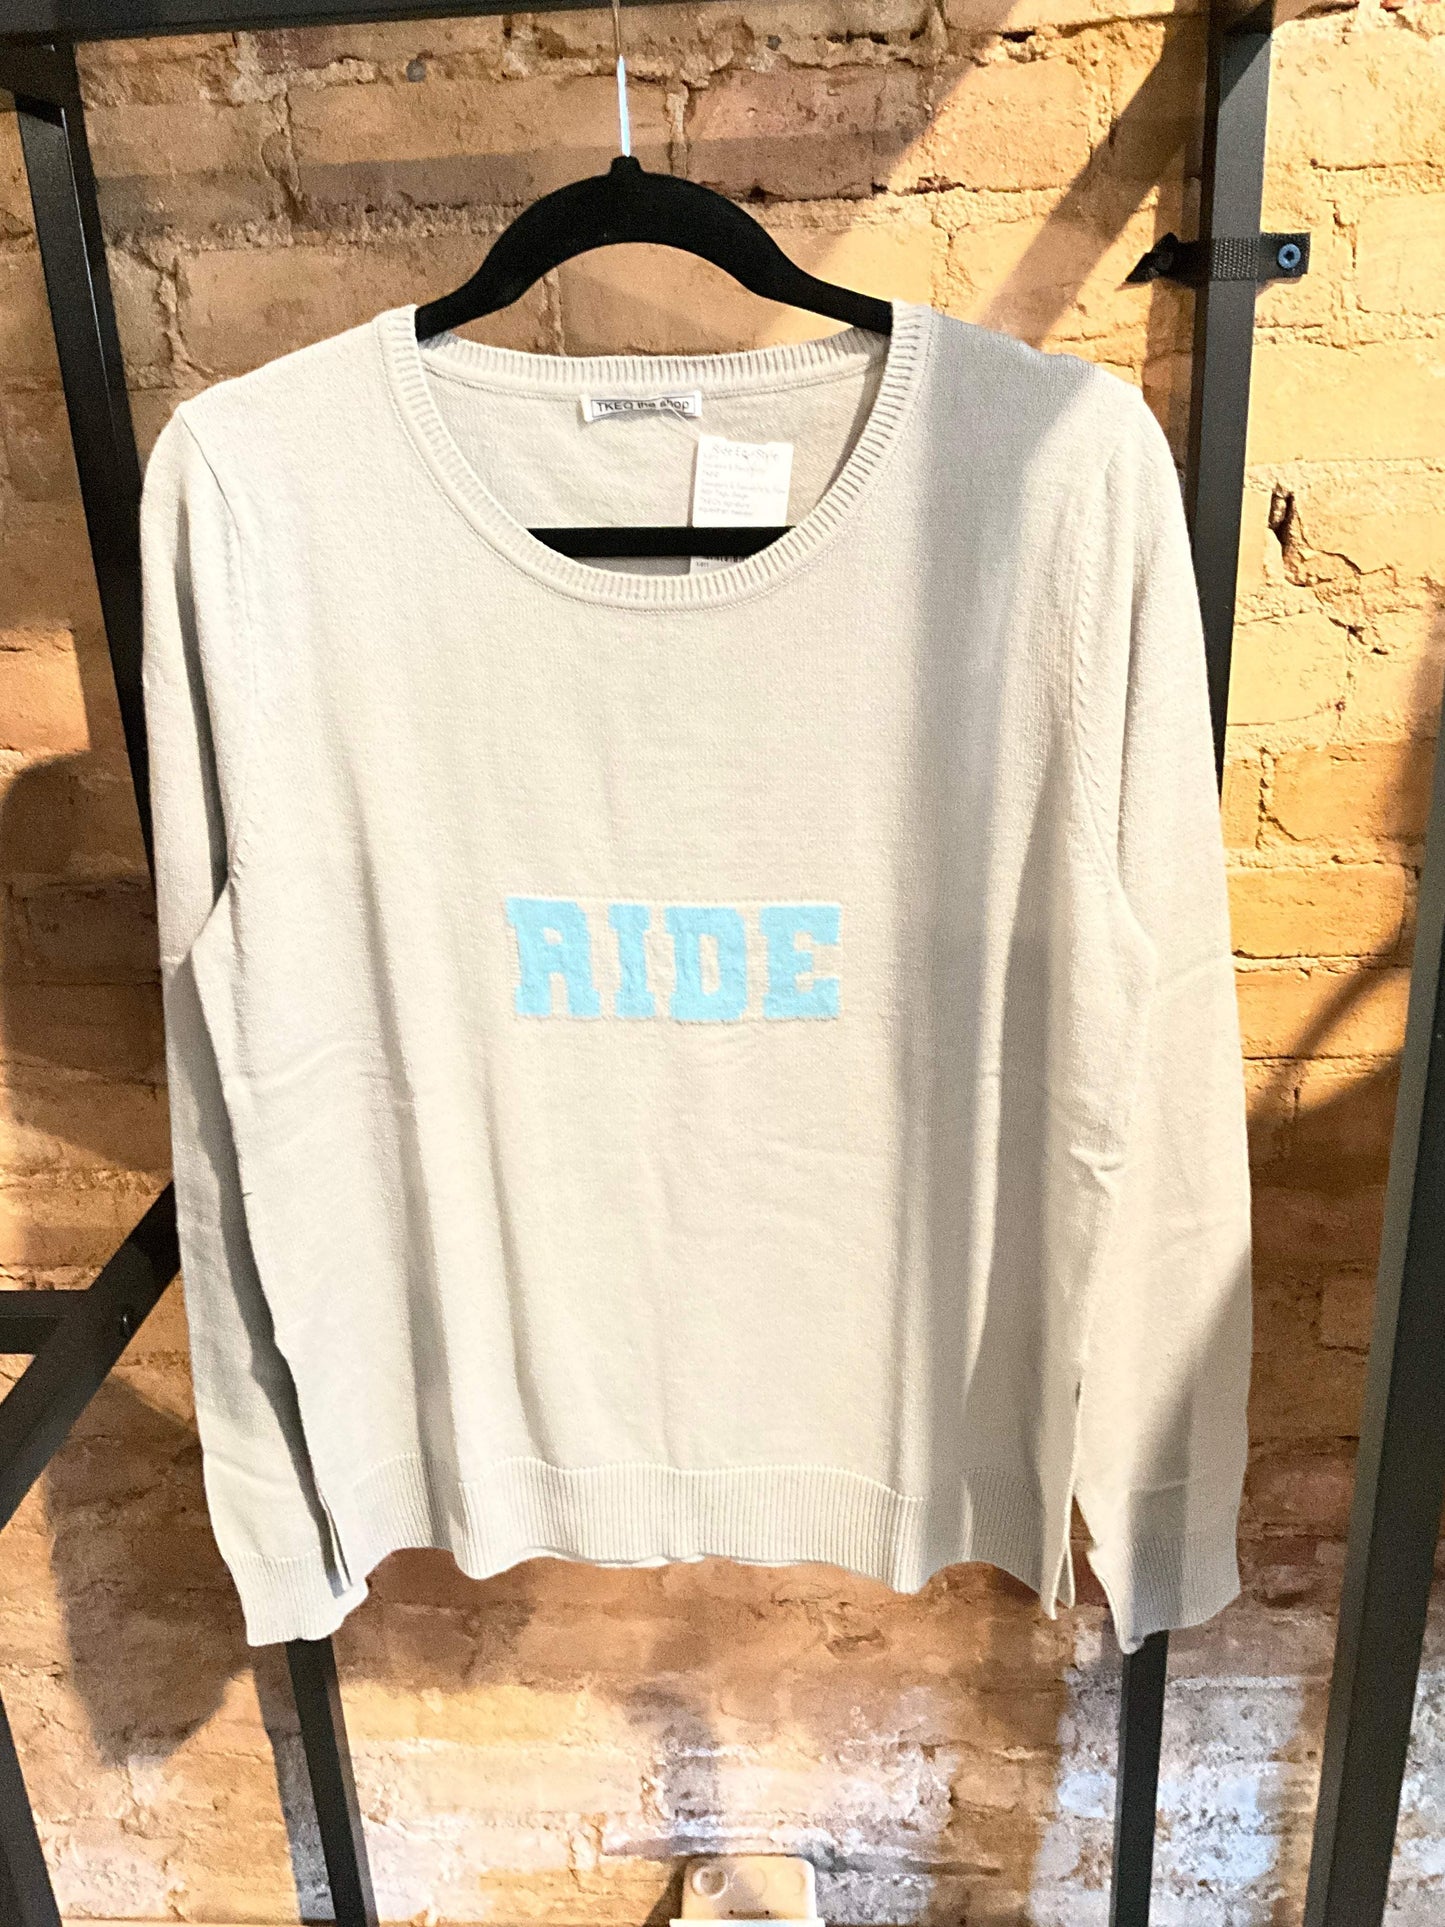 TKEQ Ride Crewneck Sweater Size L